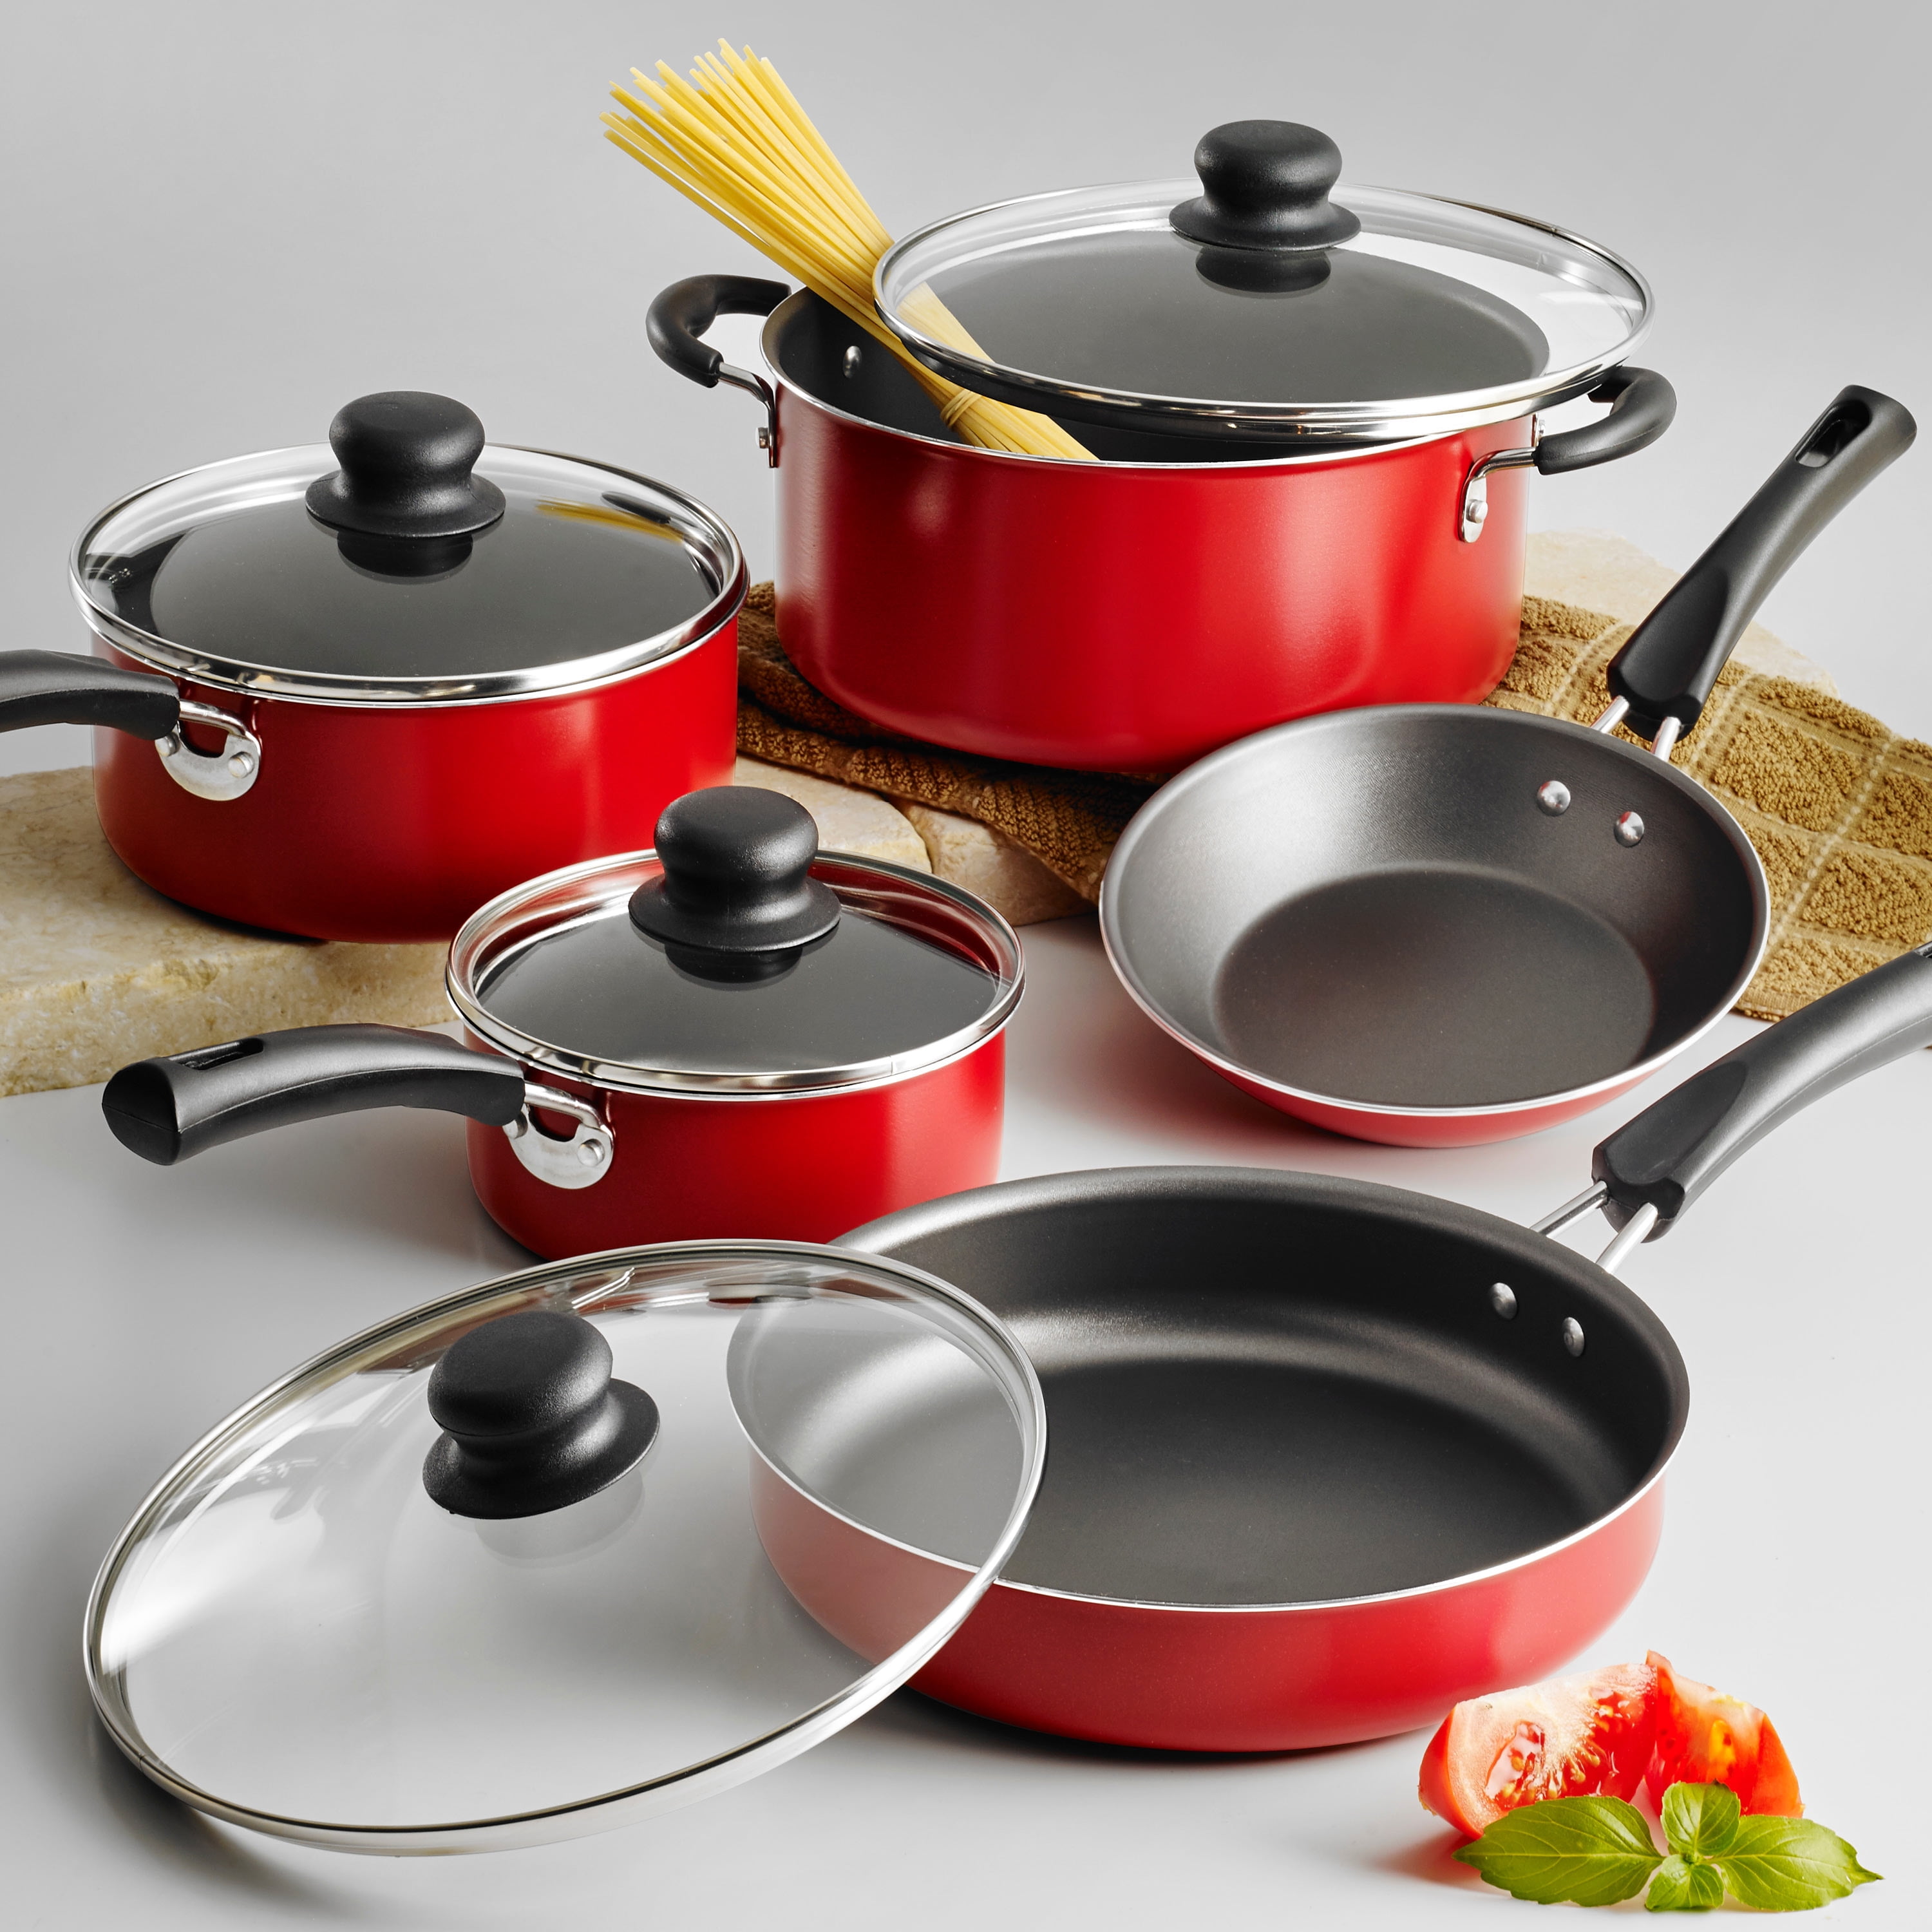 NON STICK Cookware Set New RED 18 PIECE Pots and Pans Aluminum